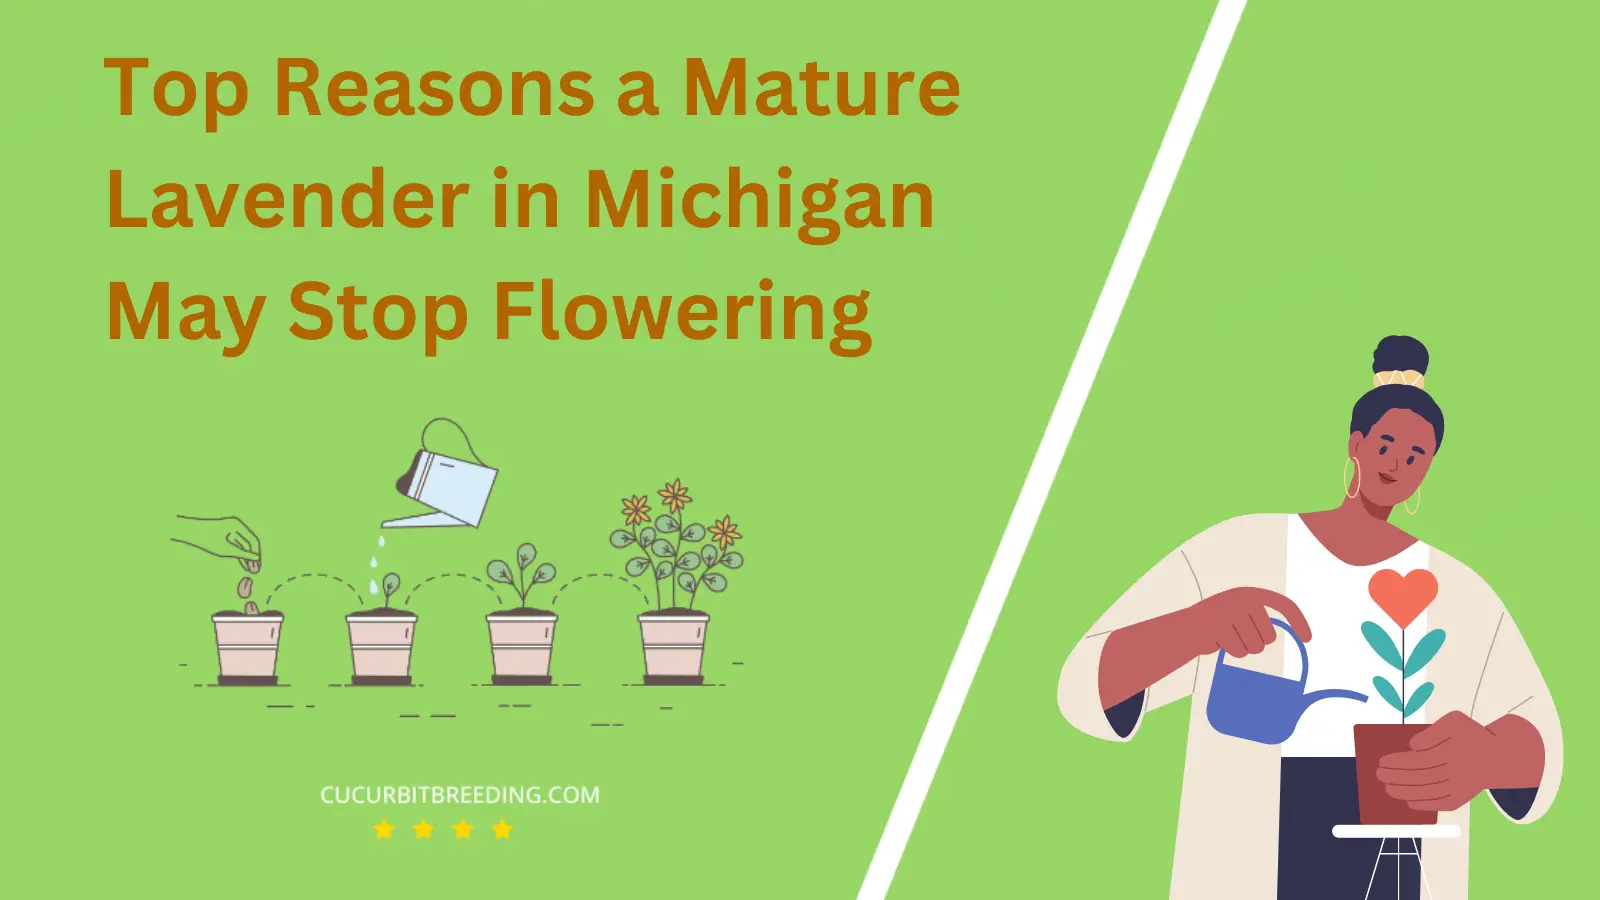 Top Reasons a Mature Lavender in Michigan May Stop Flowering